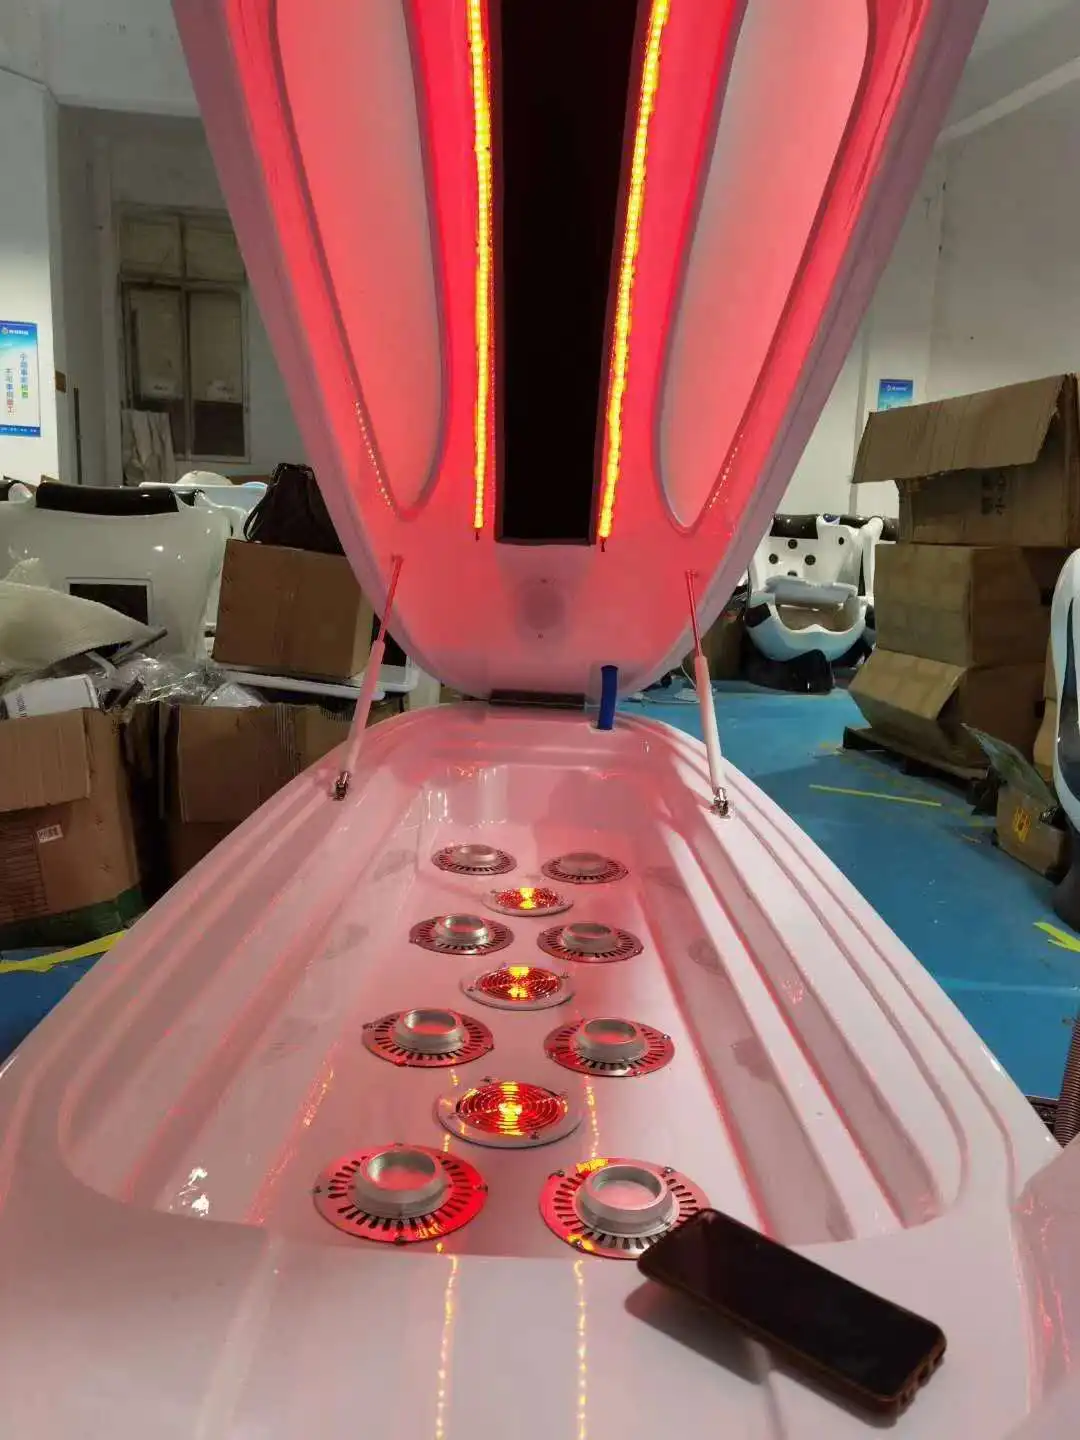 
spa capsule menu float tank spa capsule ozone saun oxygen chamber machine 2020 info red hydrotherapy luxury 3c dry infra slim 